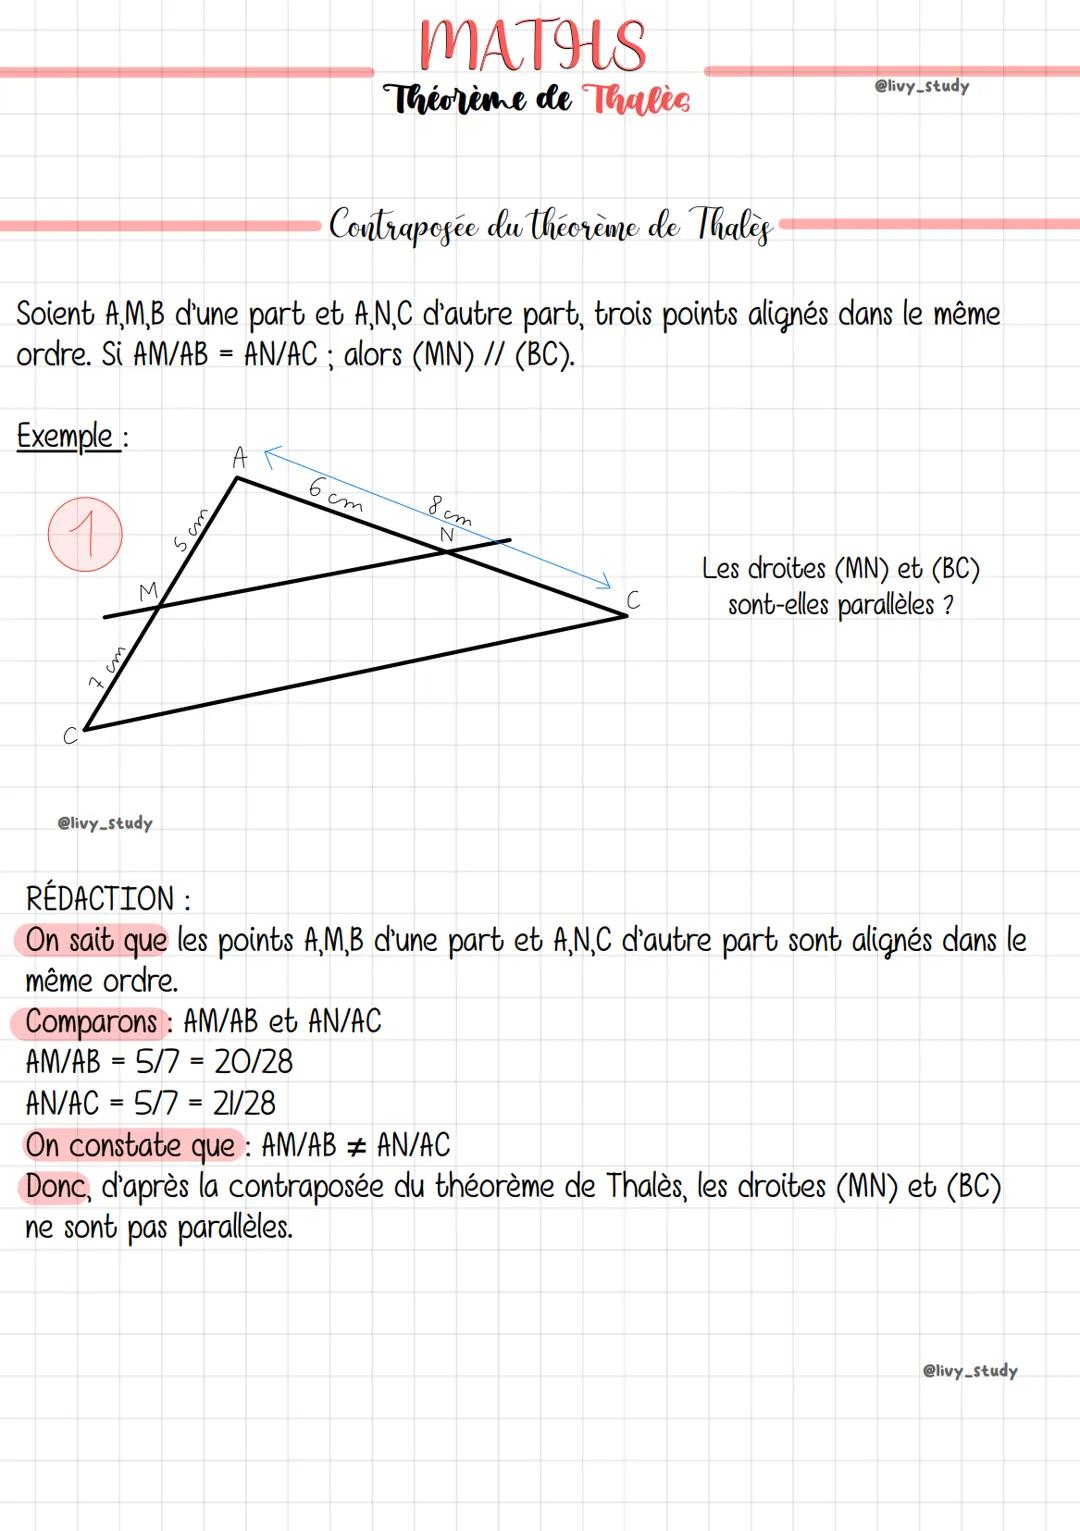 Configuration de Thales
Théorème: Soit ABC un triangle tel que (MN) // (BC); alors on a :
AM/AB = AN/AC = MN/BC (ou bien AB/AM = AC/AN=BC/MN